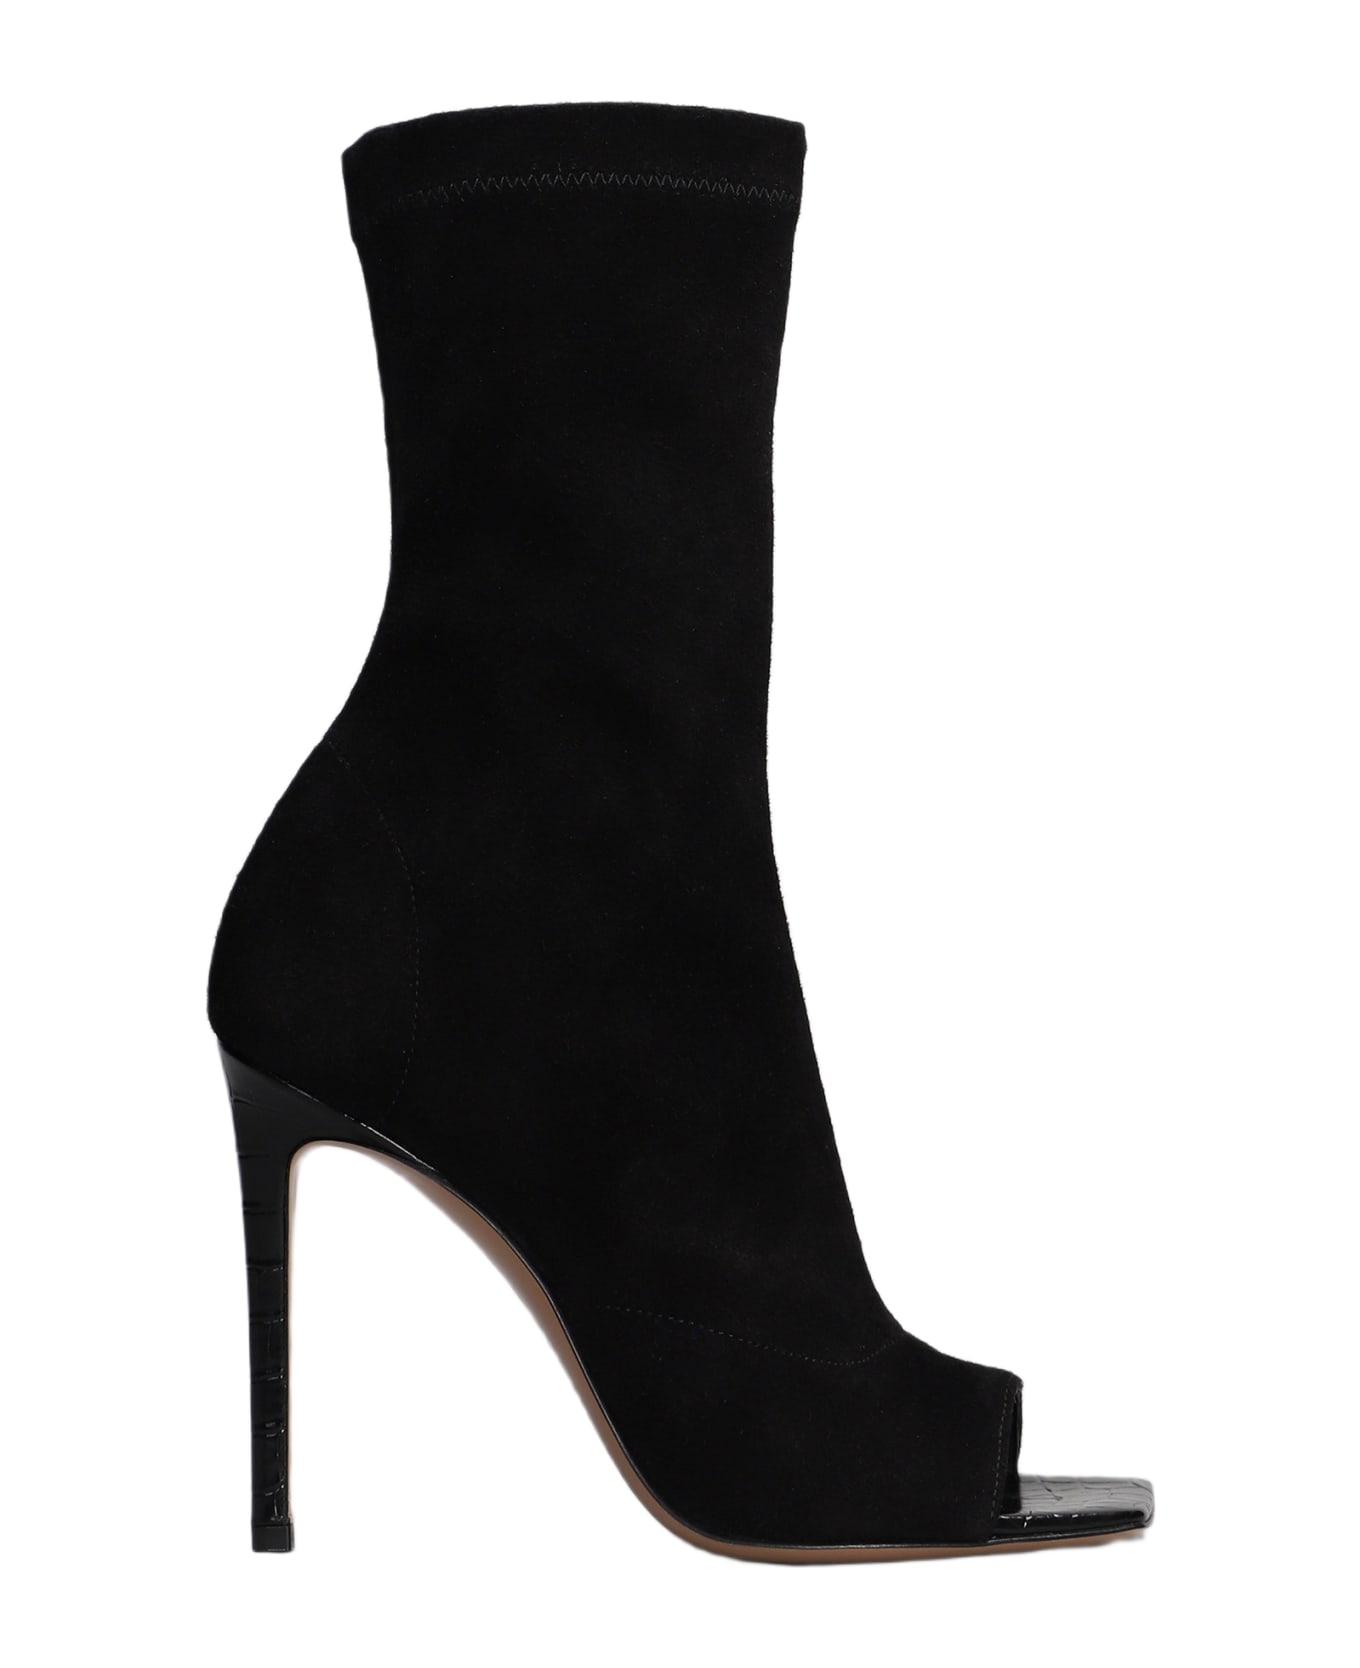 Paris Texas Amanda High Heels Ankle Boots In Black Suede - Black ブーツ